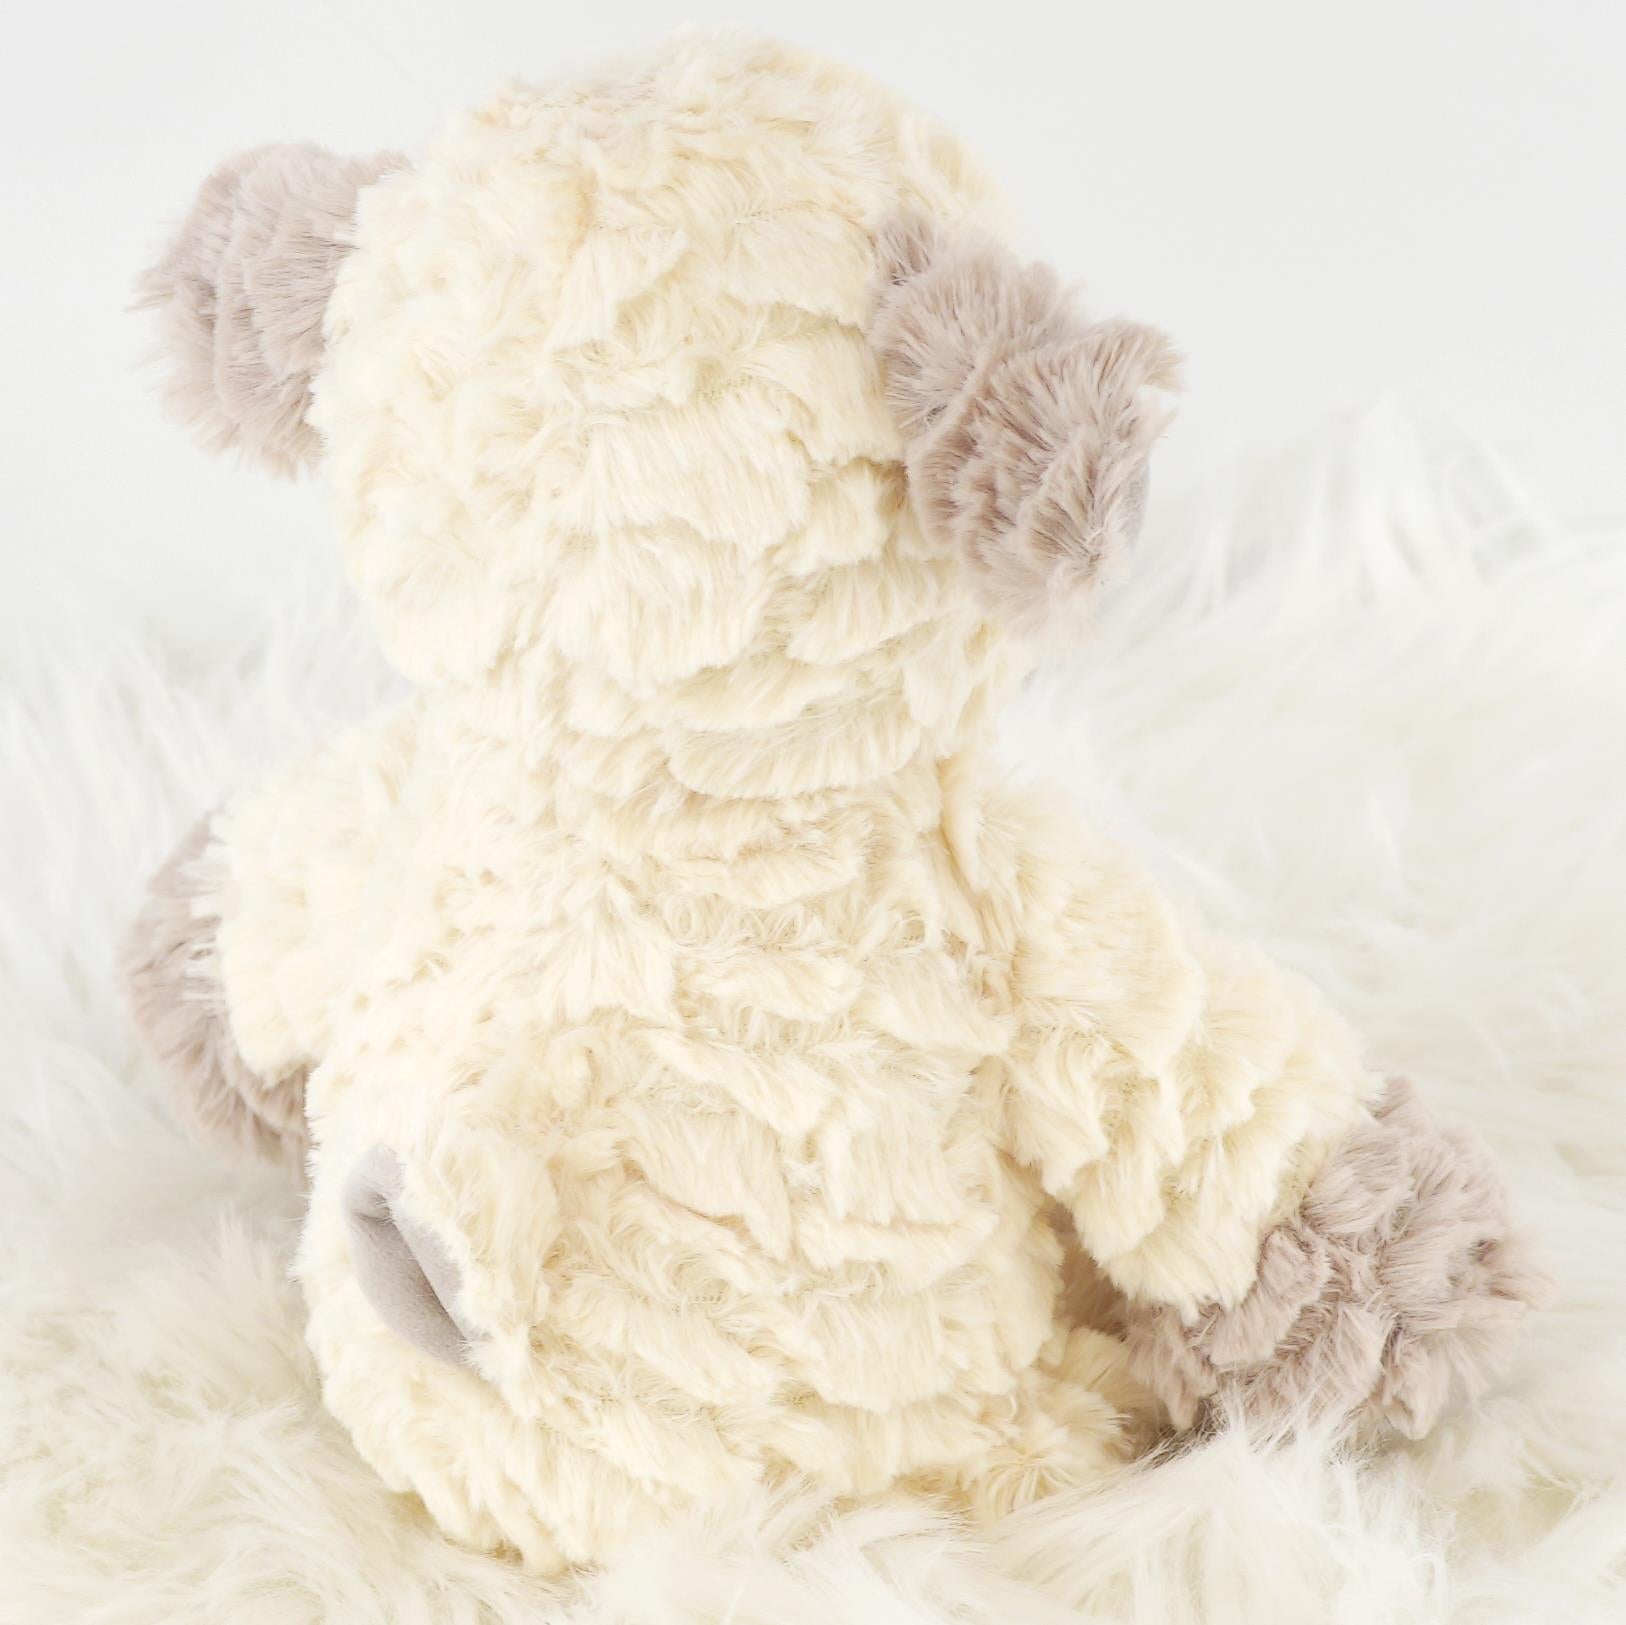 Plush Super Soft Lamb Cuddly Toy by The Magic Toy Shop - The Magic Toy Shop